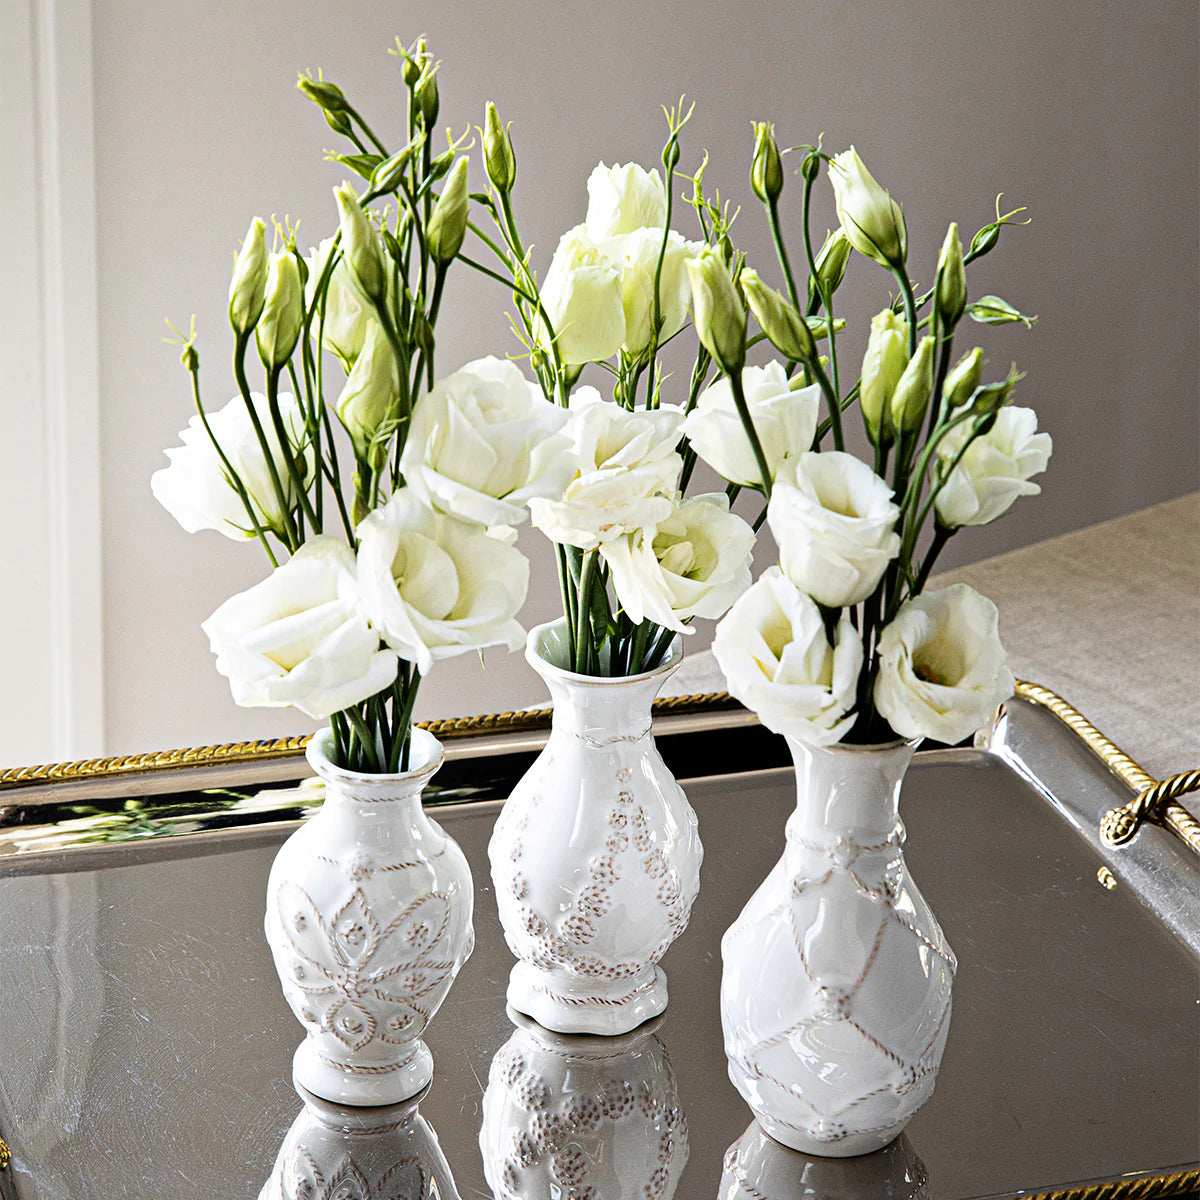 Jardins du Monde Whitewash Mini Vase Trio